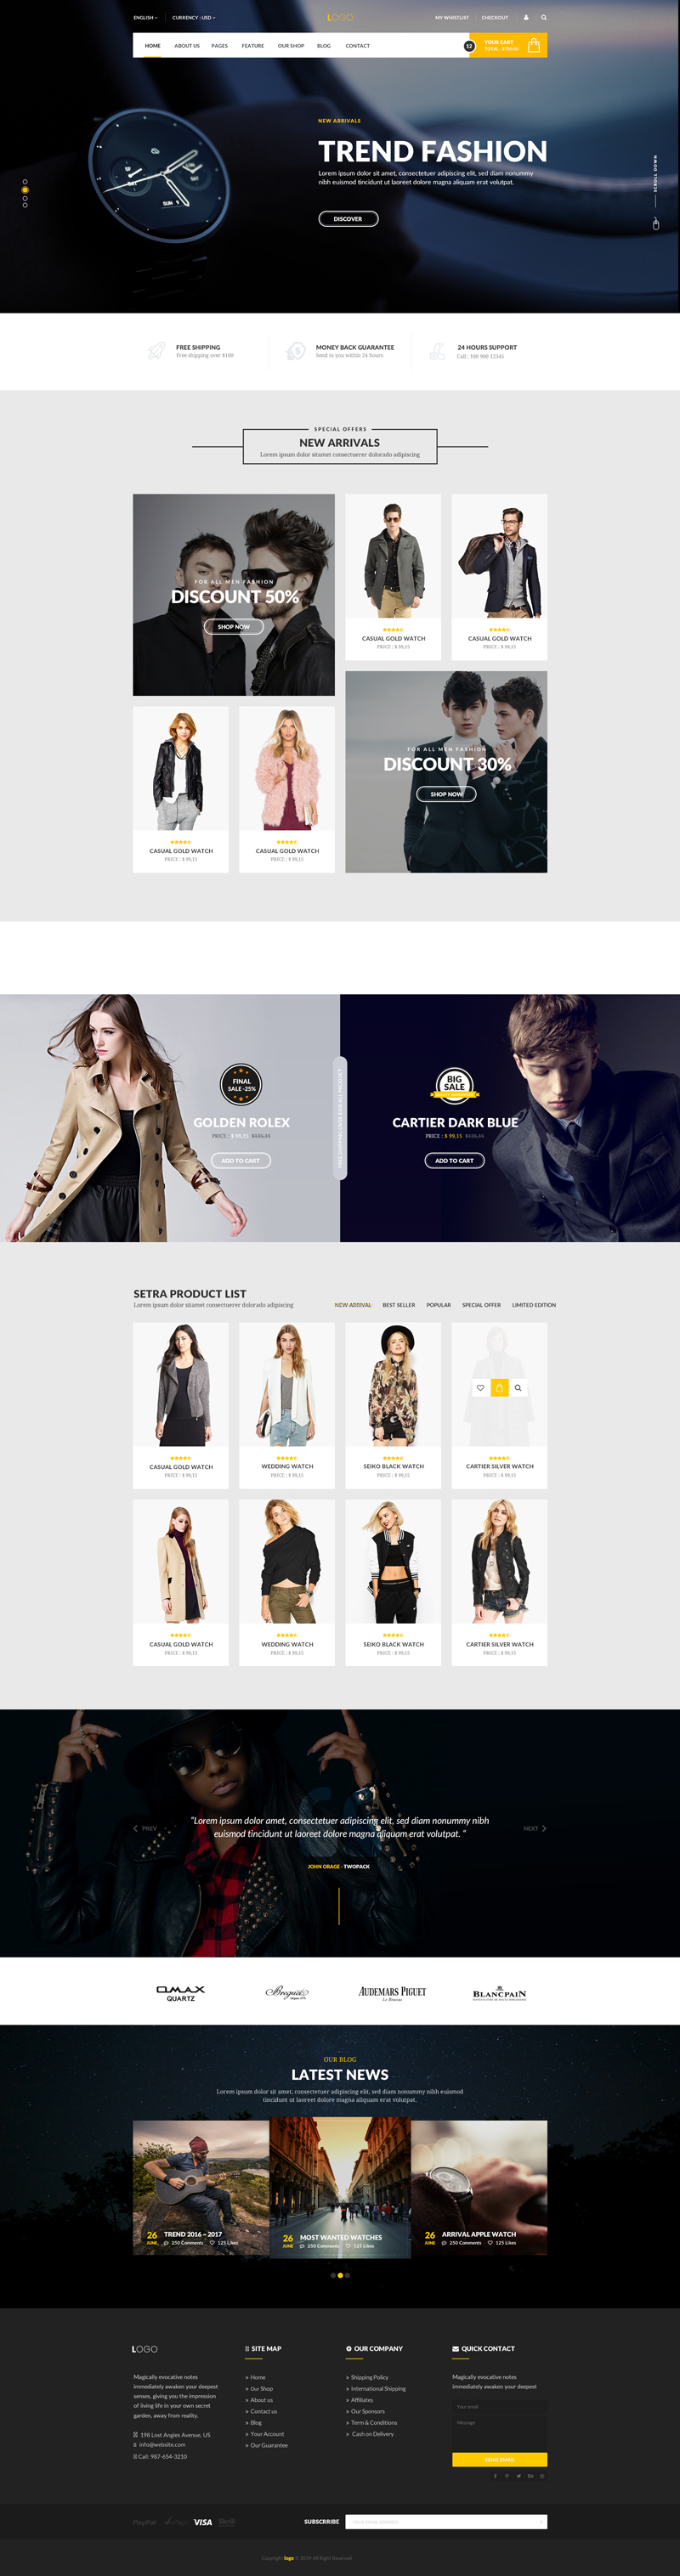 Fashion website design portfolio